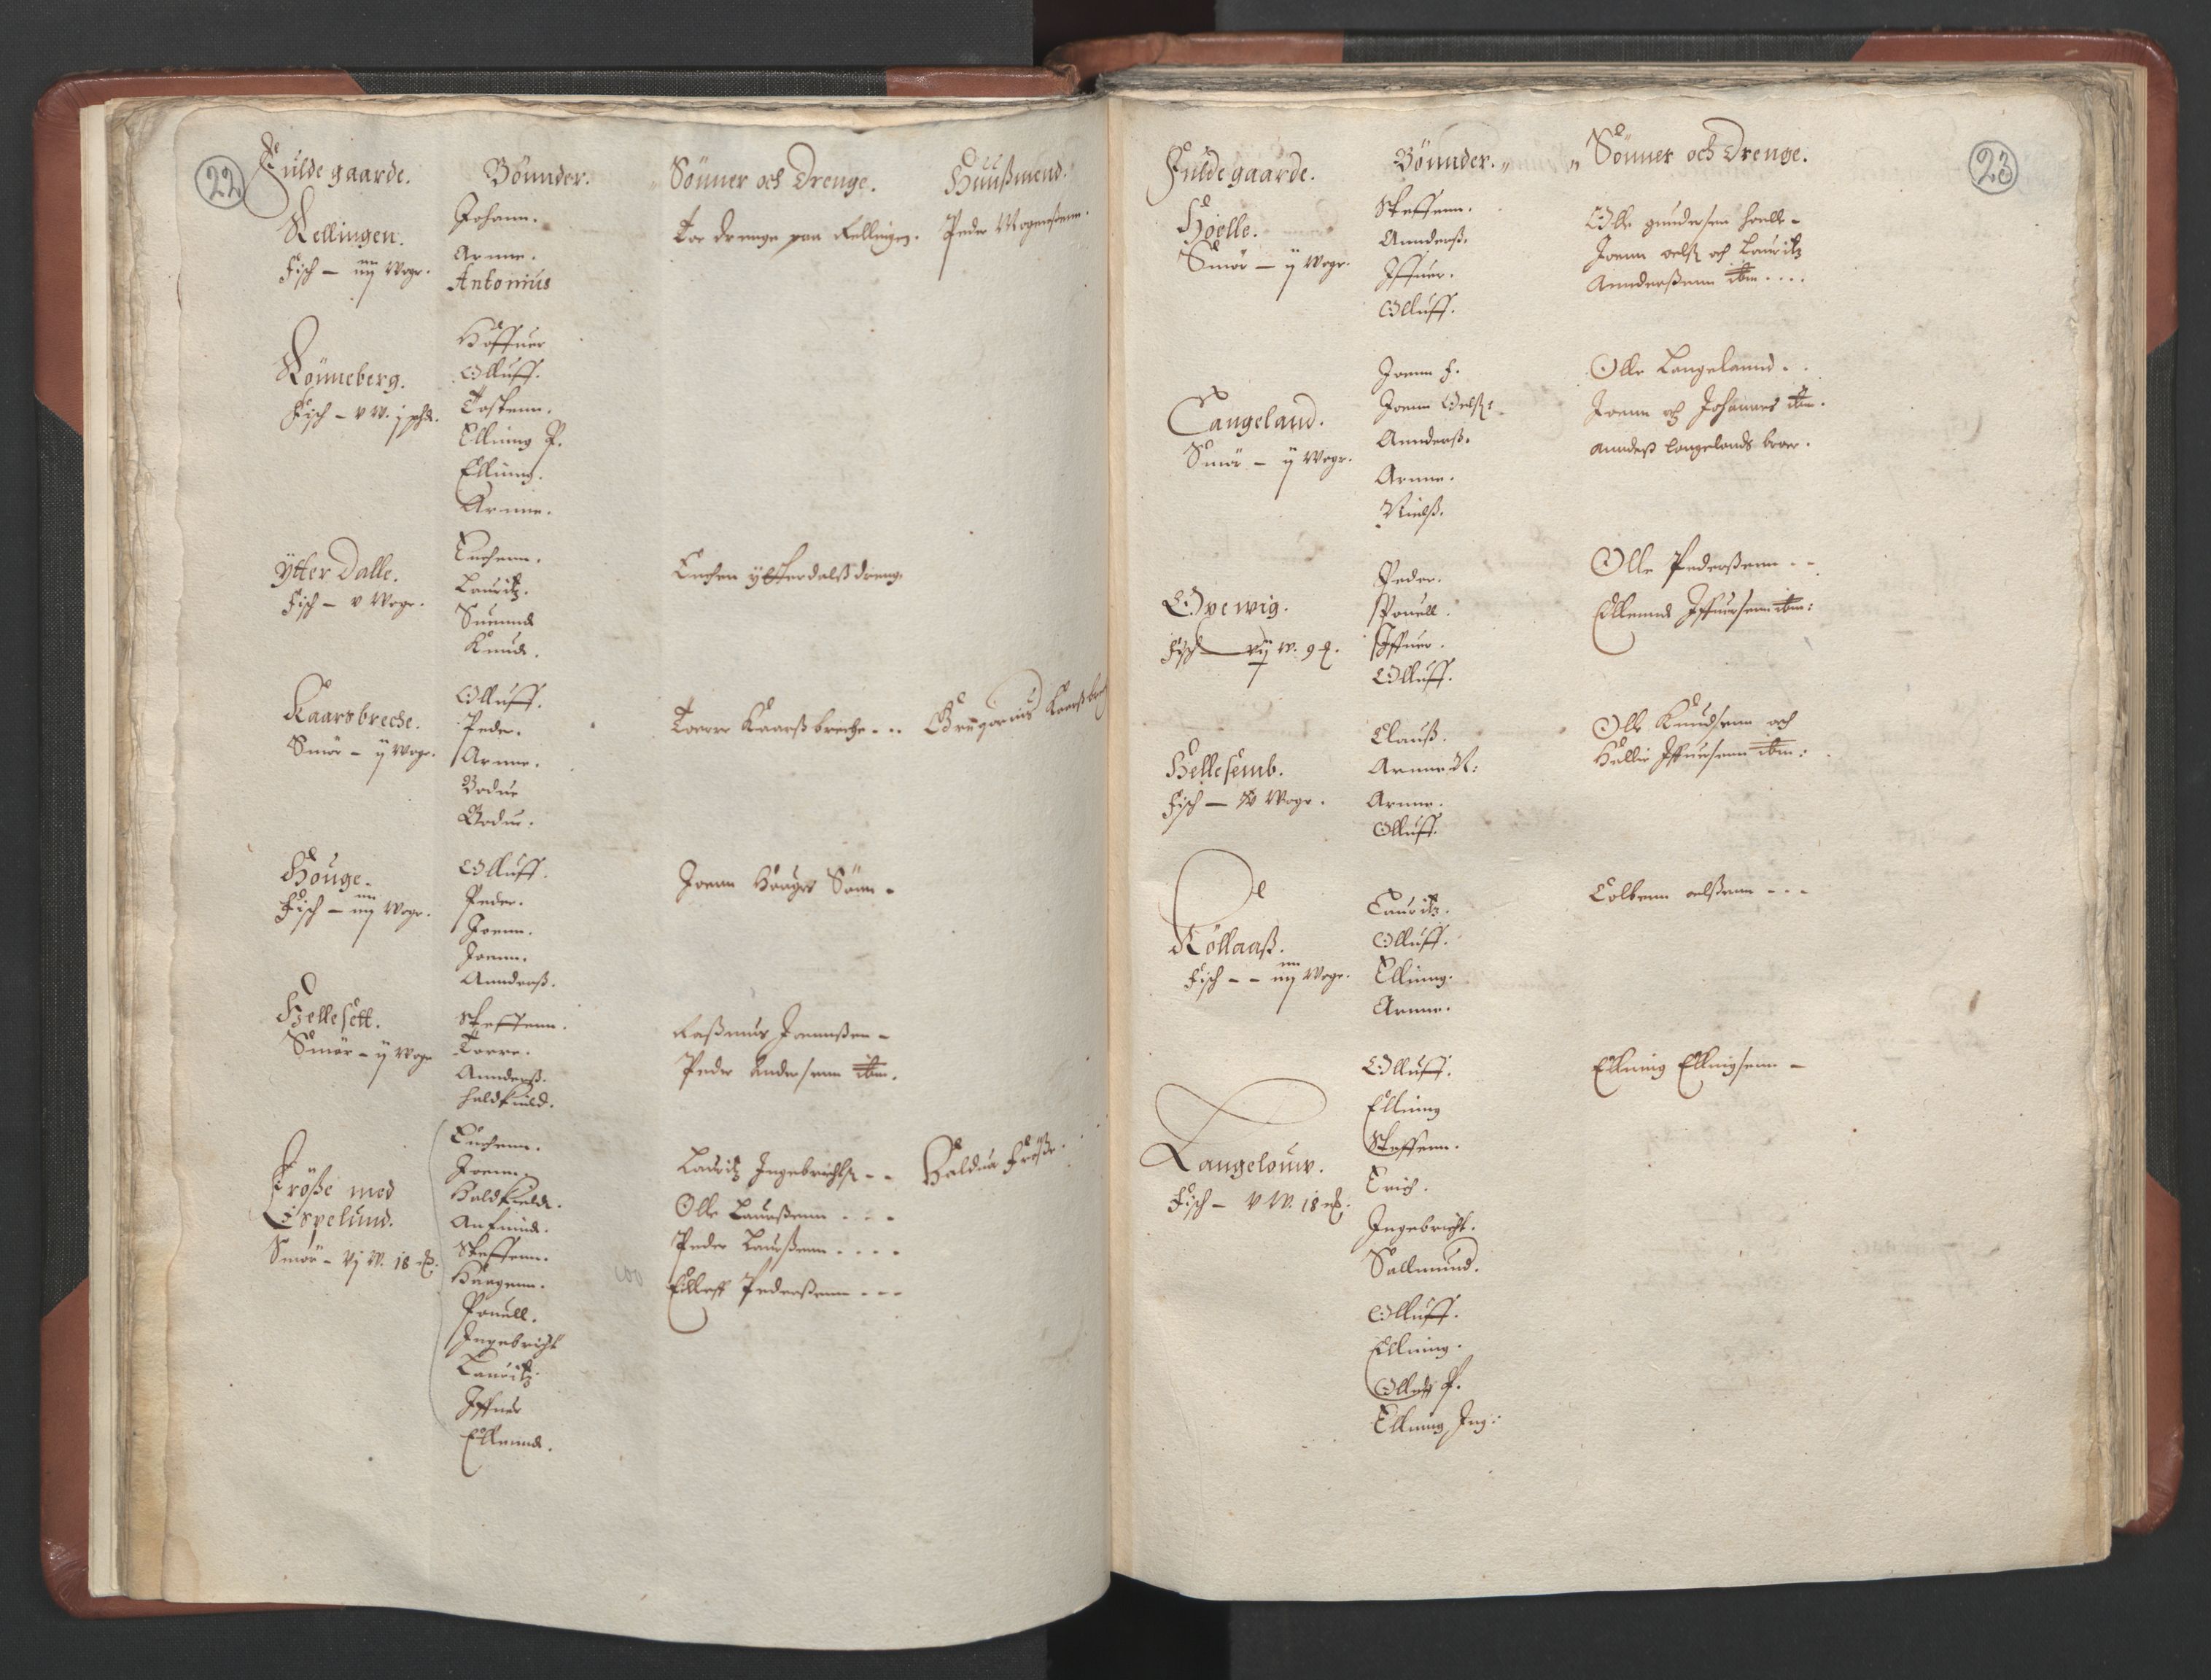 RA, Fogdenes og sorenskrivernes manntall 1664-1666, nr. 16: Romsdal fogderi og Sunnmøre fogderi, 1664-1665, s. 22-23